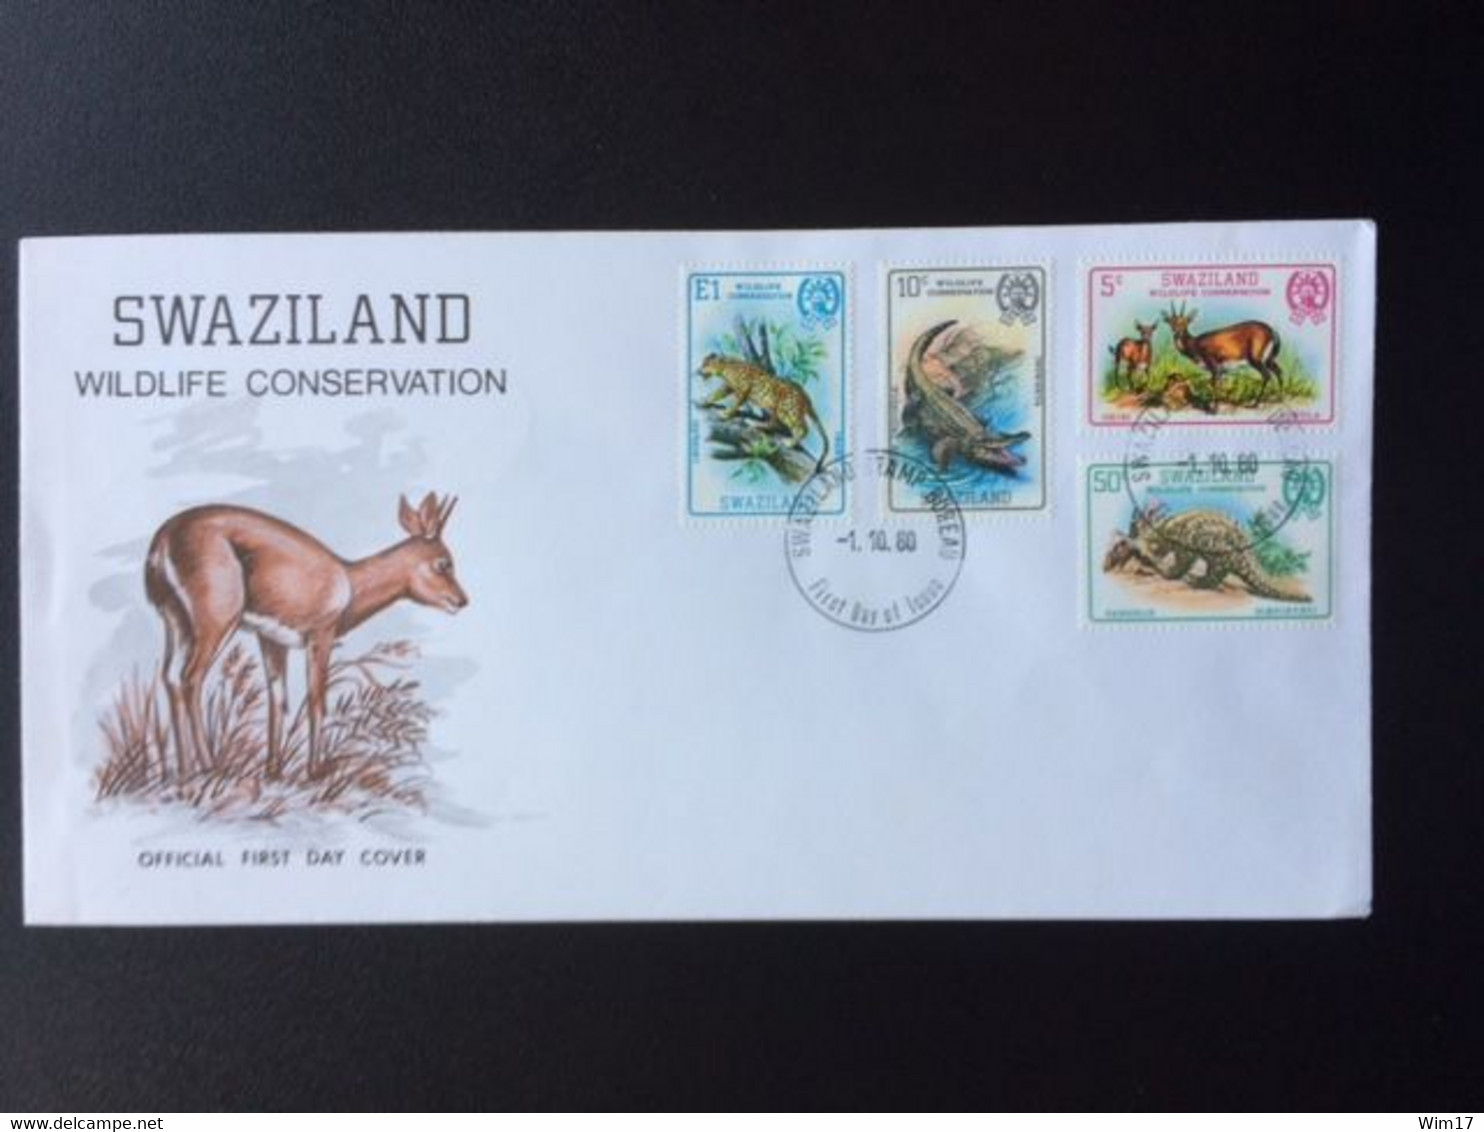 SWAZILAND 1980 FDC WILDLIFE CONSERVATION - Swaziland (1968-...)